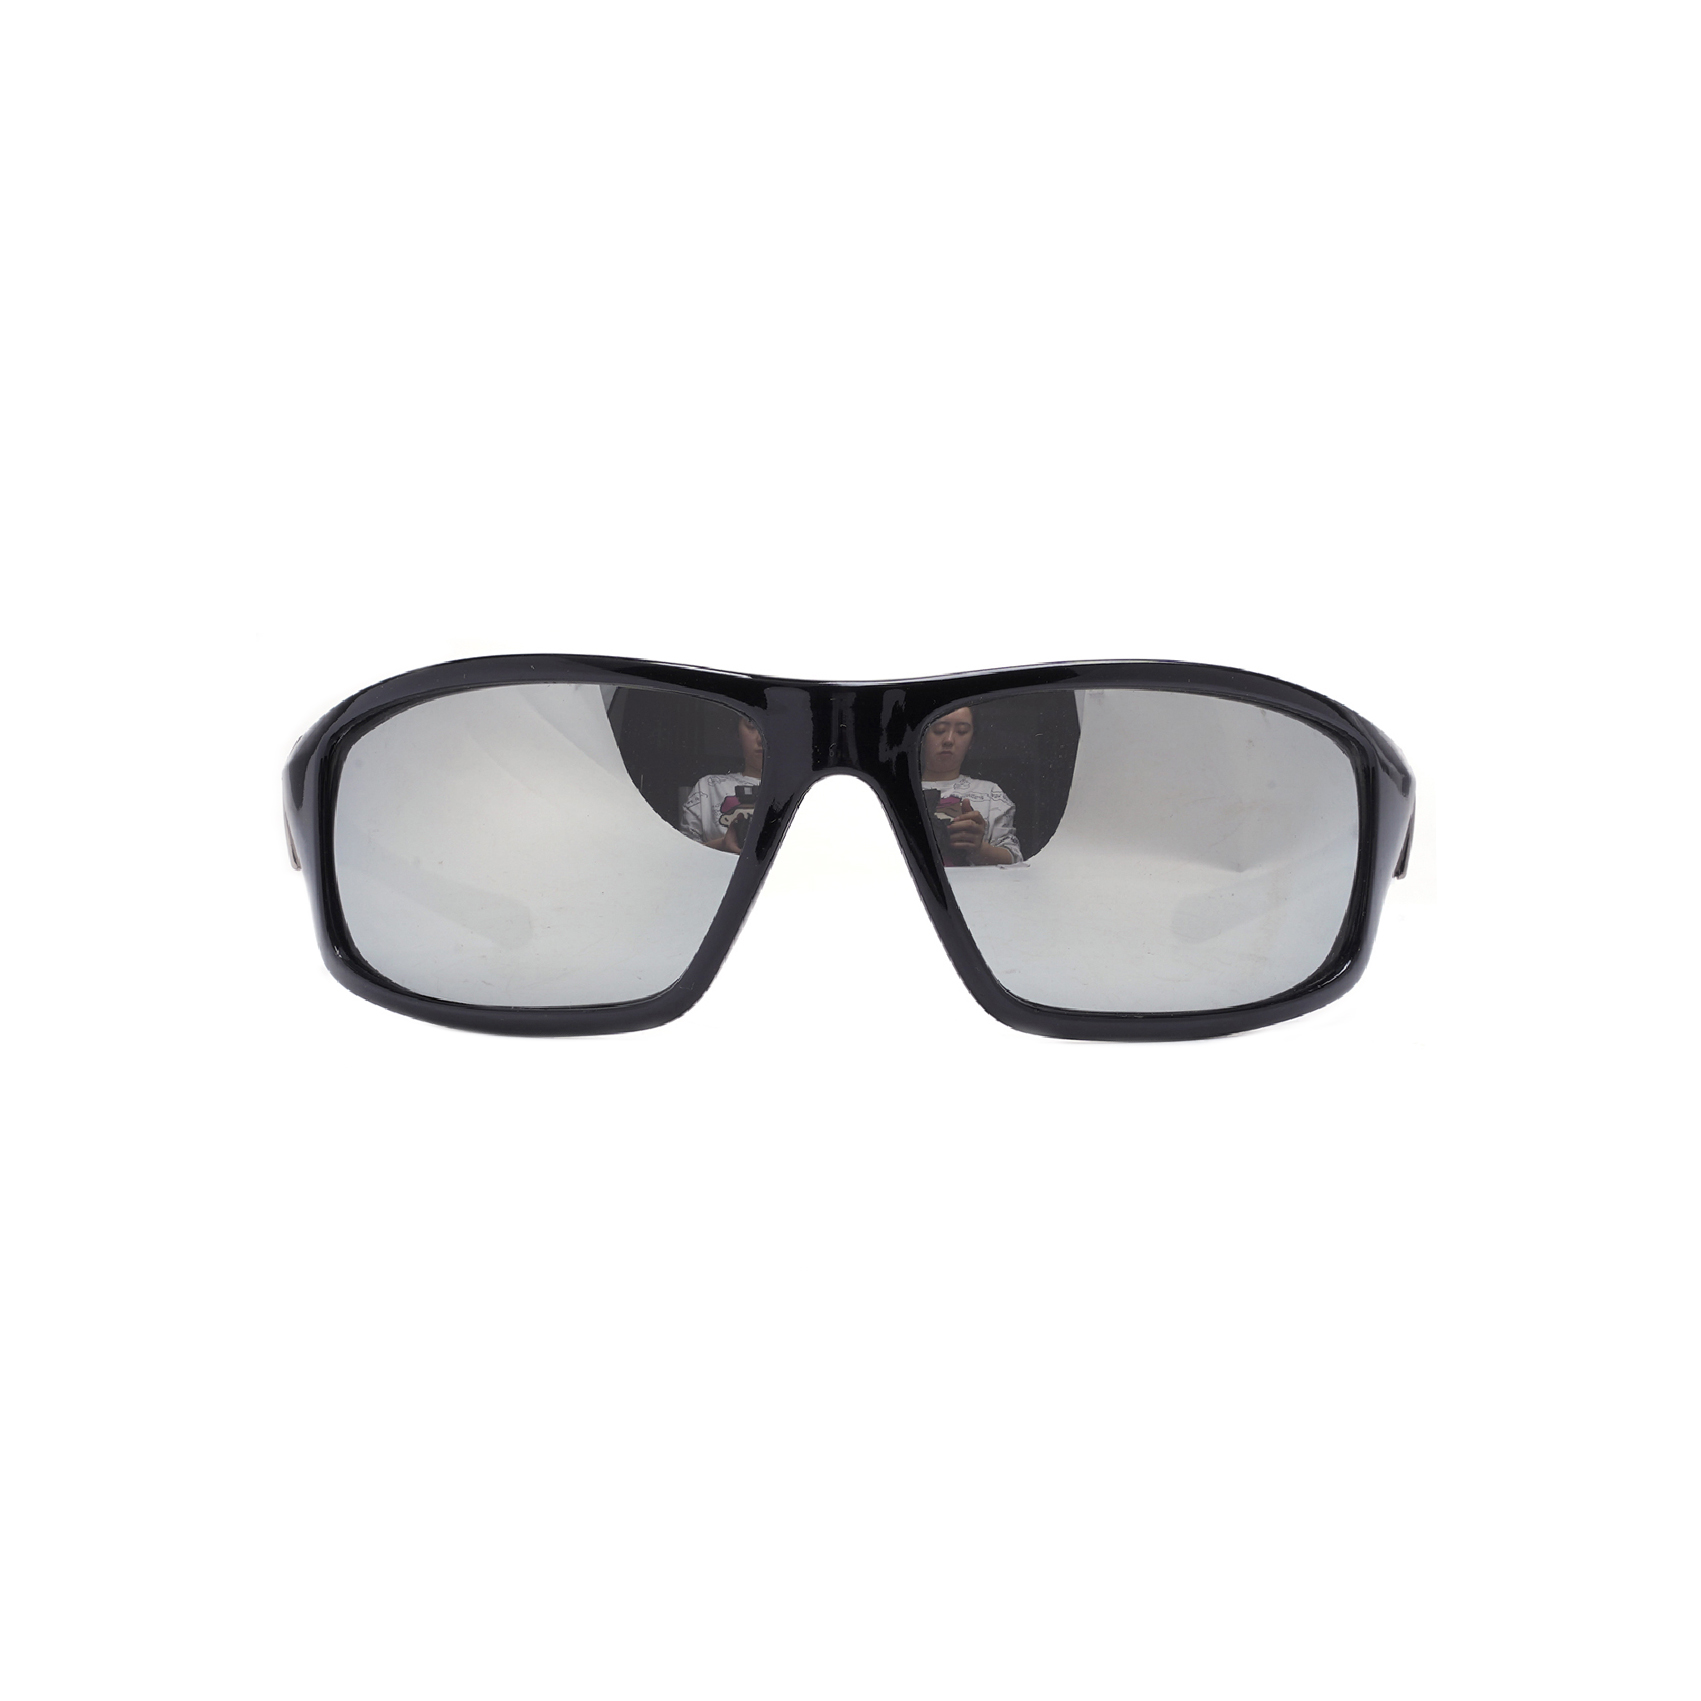 Classic Black Sport Sunglasses Sport Brand Sunglasses Manufacturer